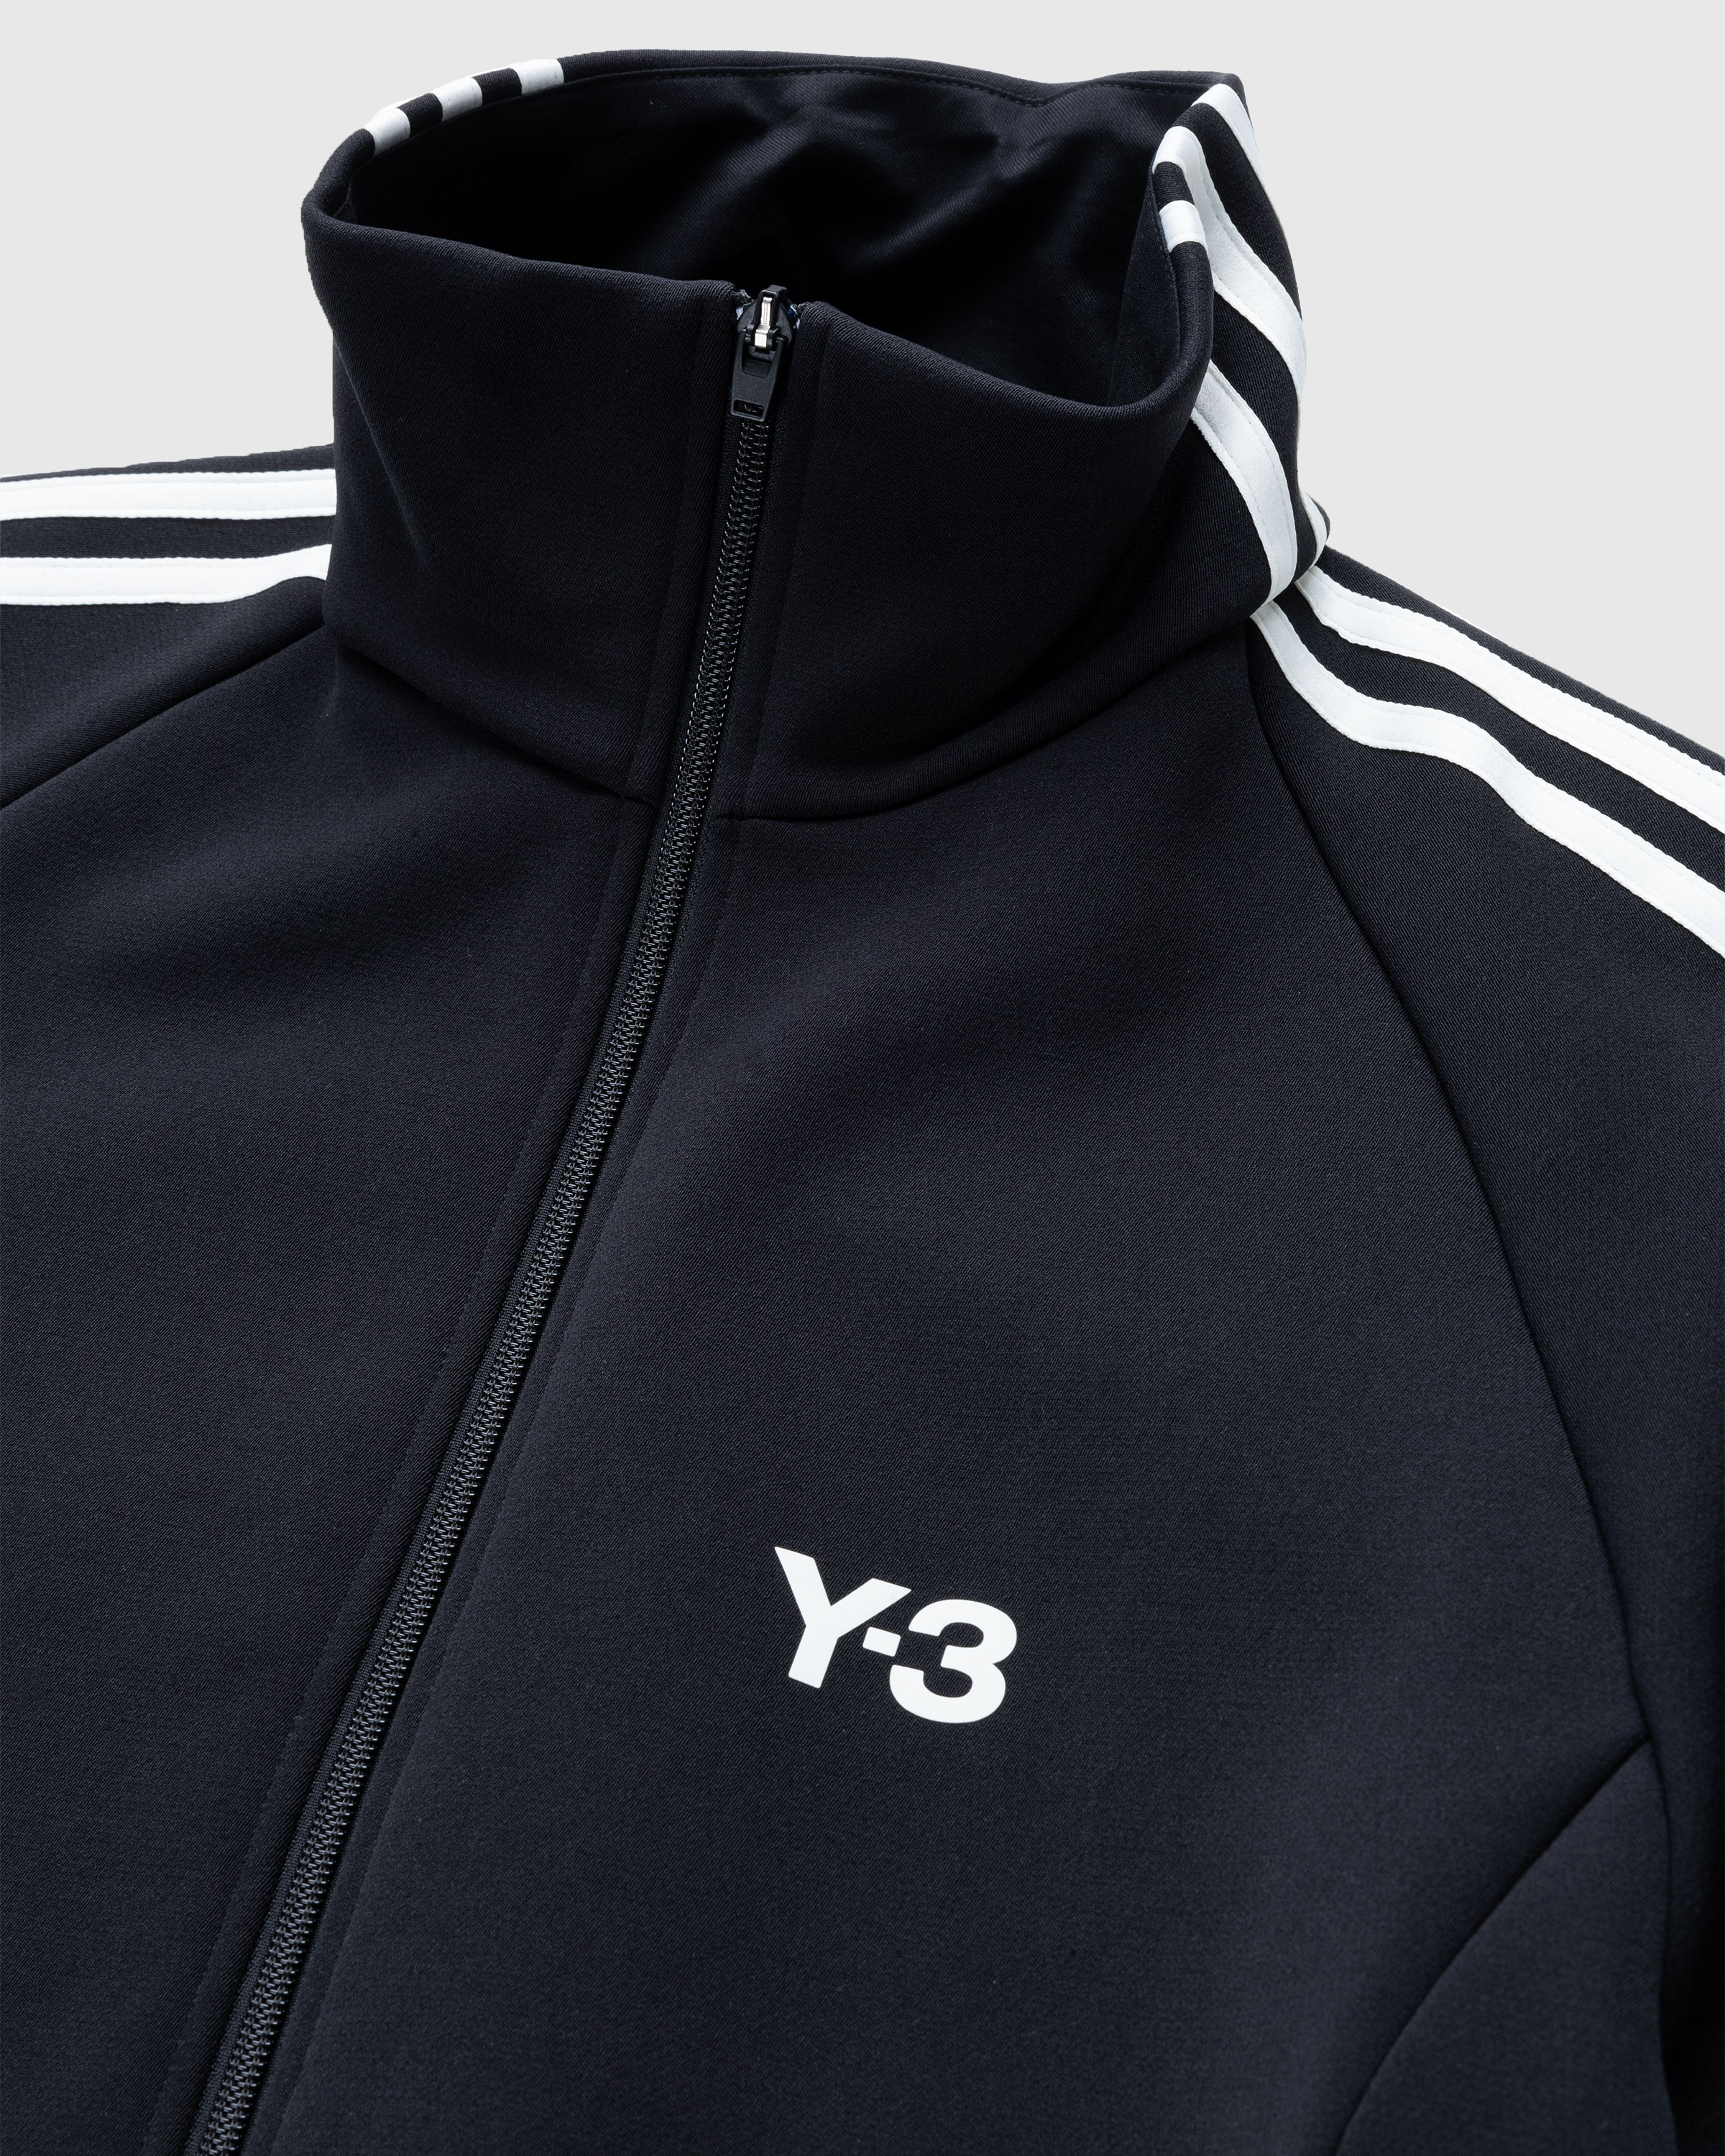 Y-3 – 3 Stripes Track Top Black/White - Outerwear - Black - Image 6